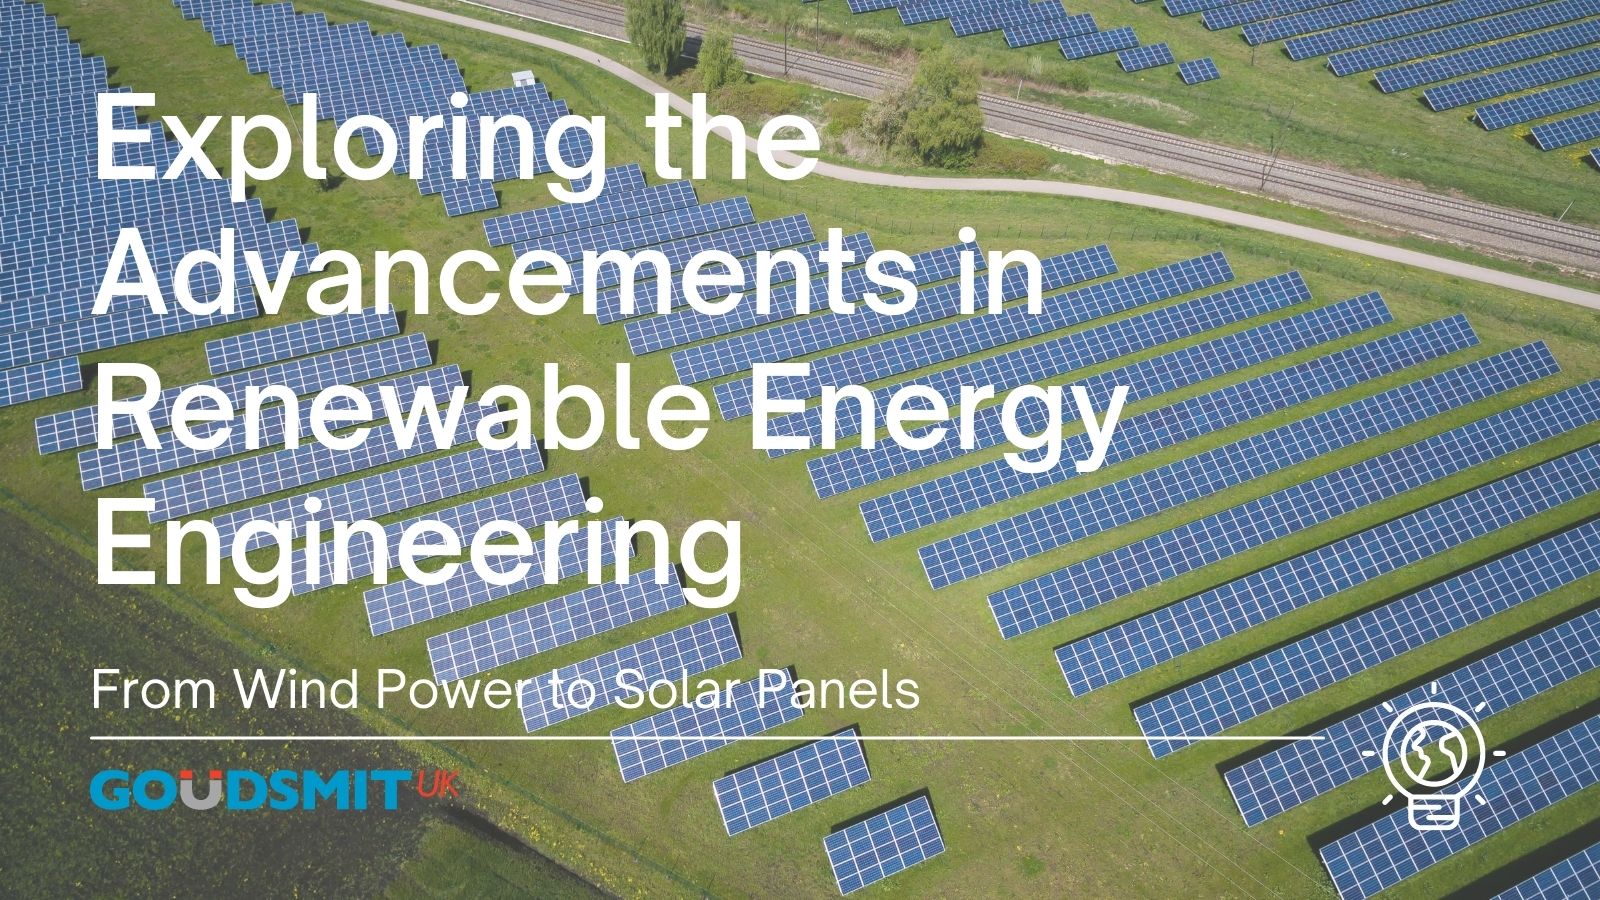 Renewable Energy Engineering - Solar Panels